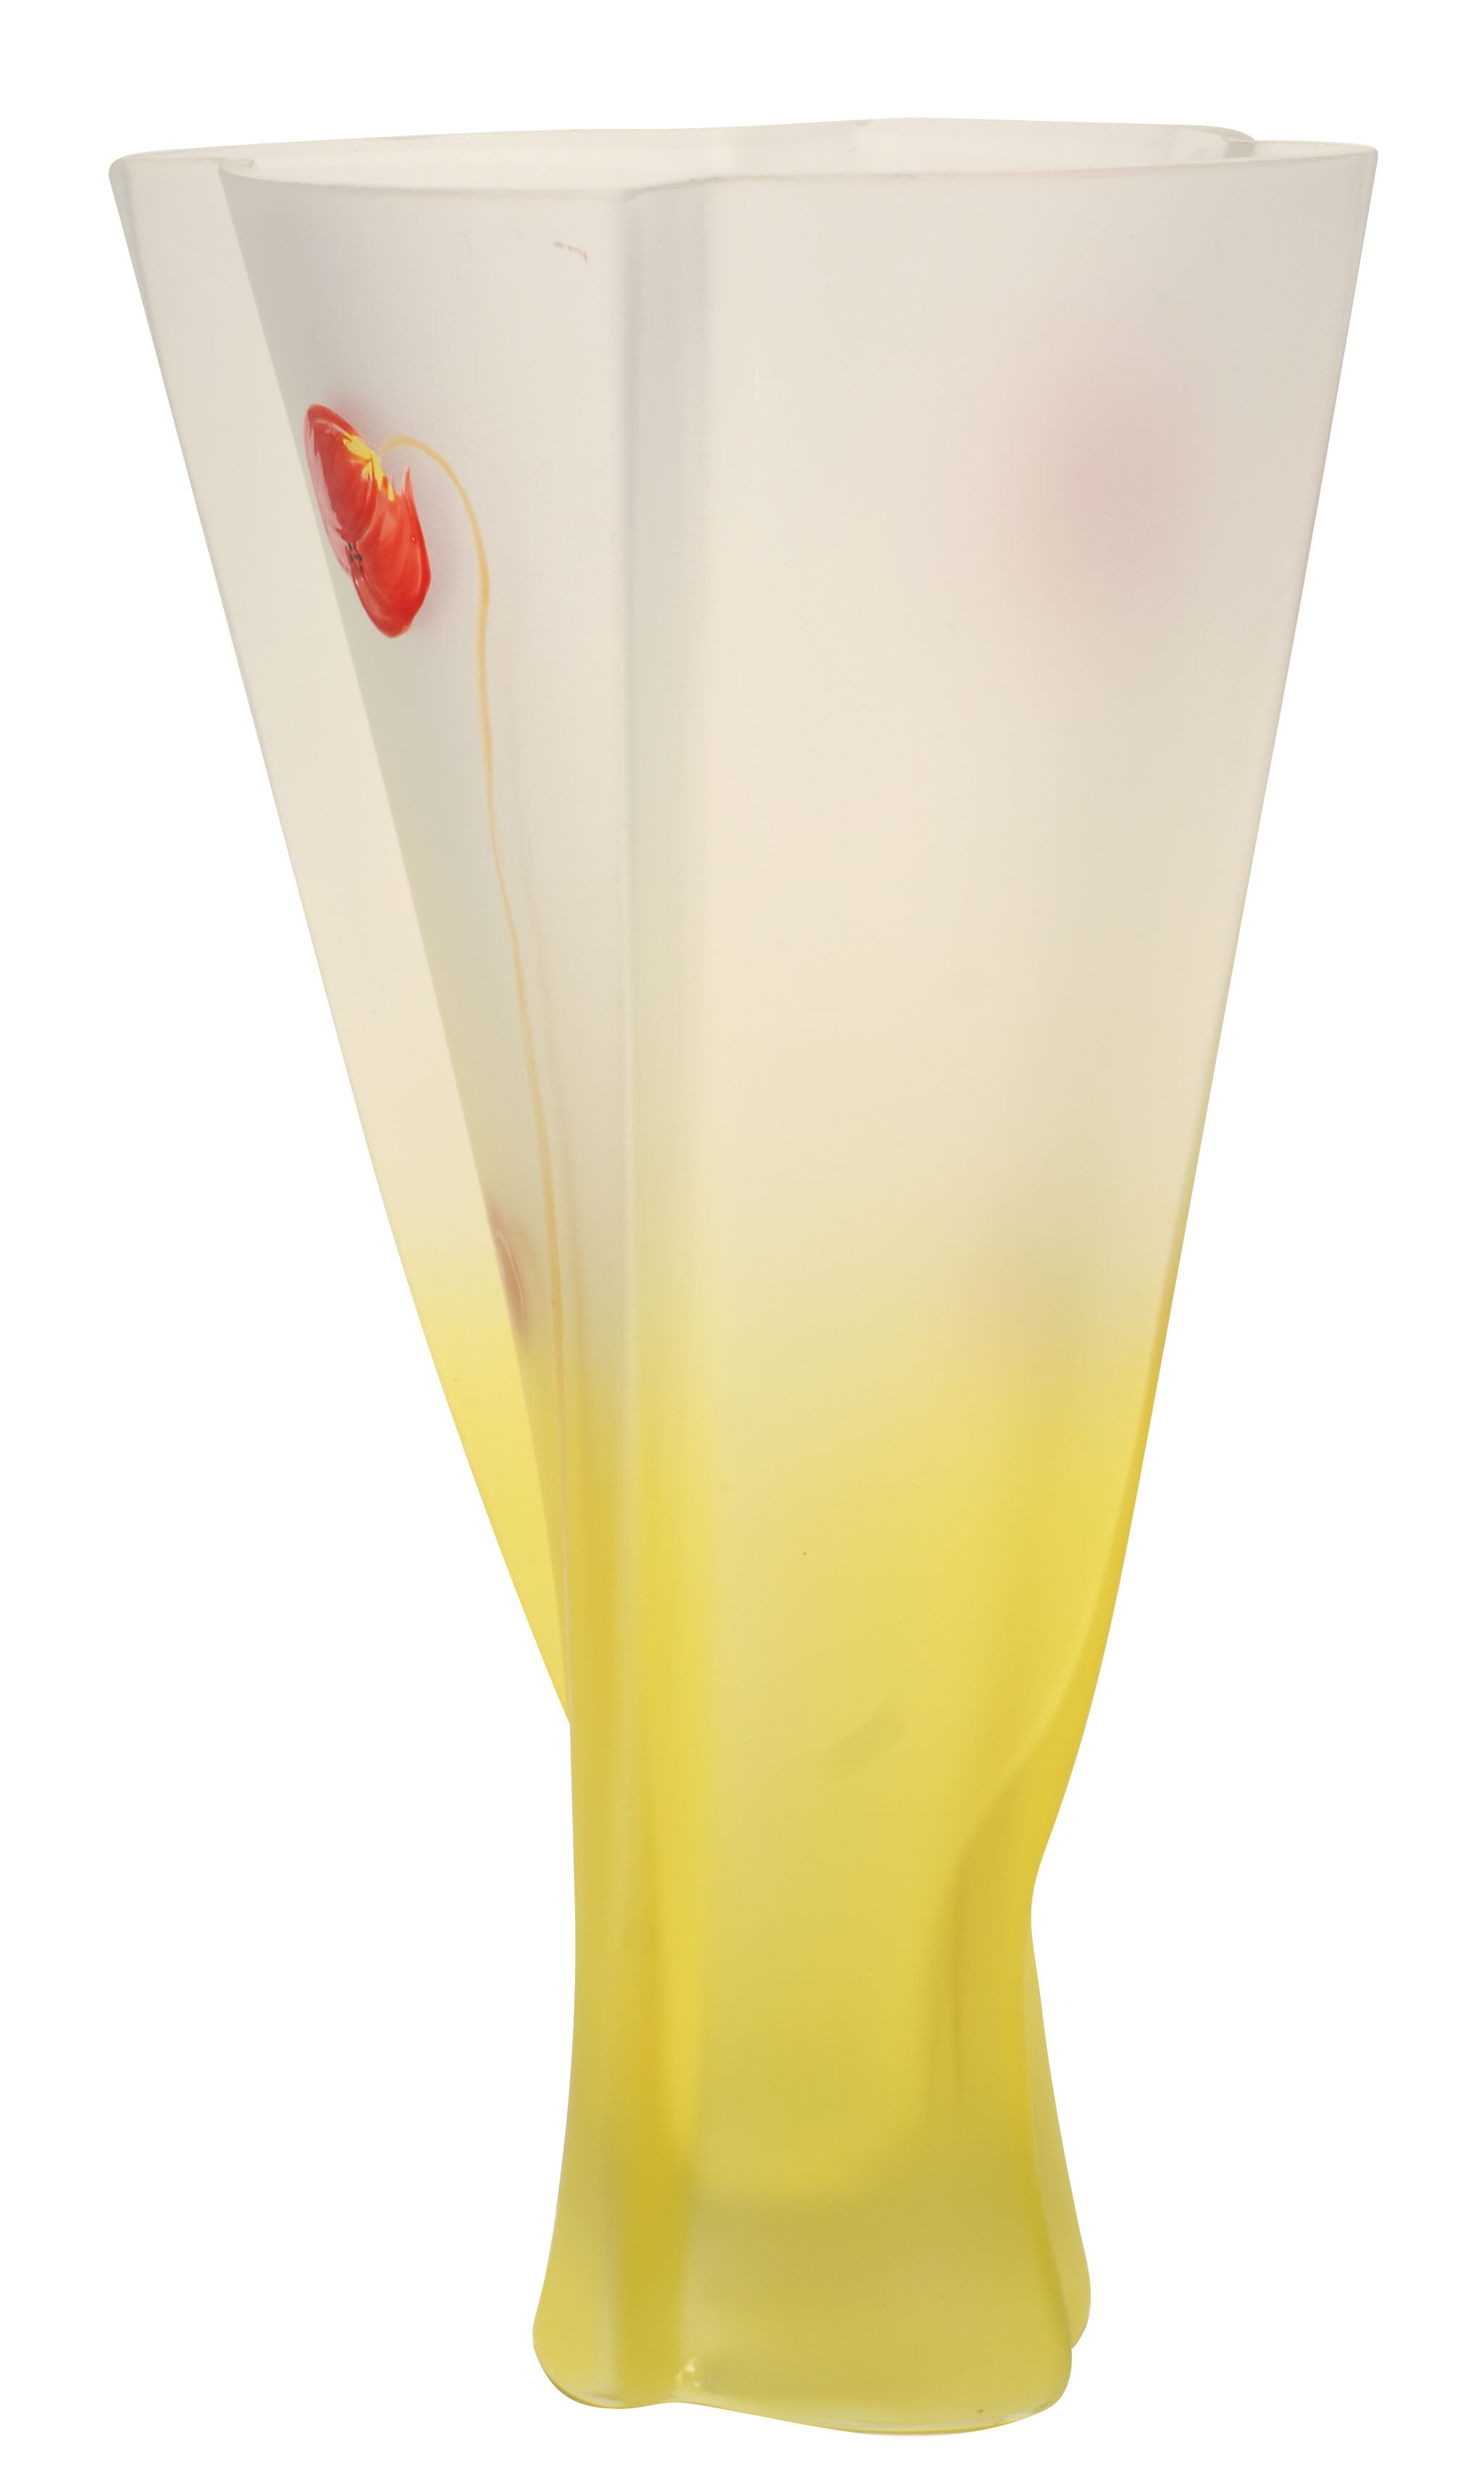 Glass Vase - Poppy Flower Series, 7 inches Wide